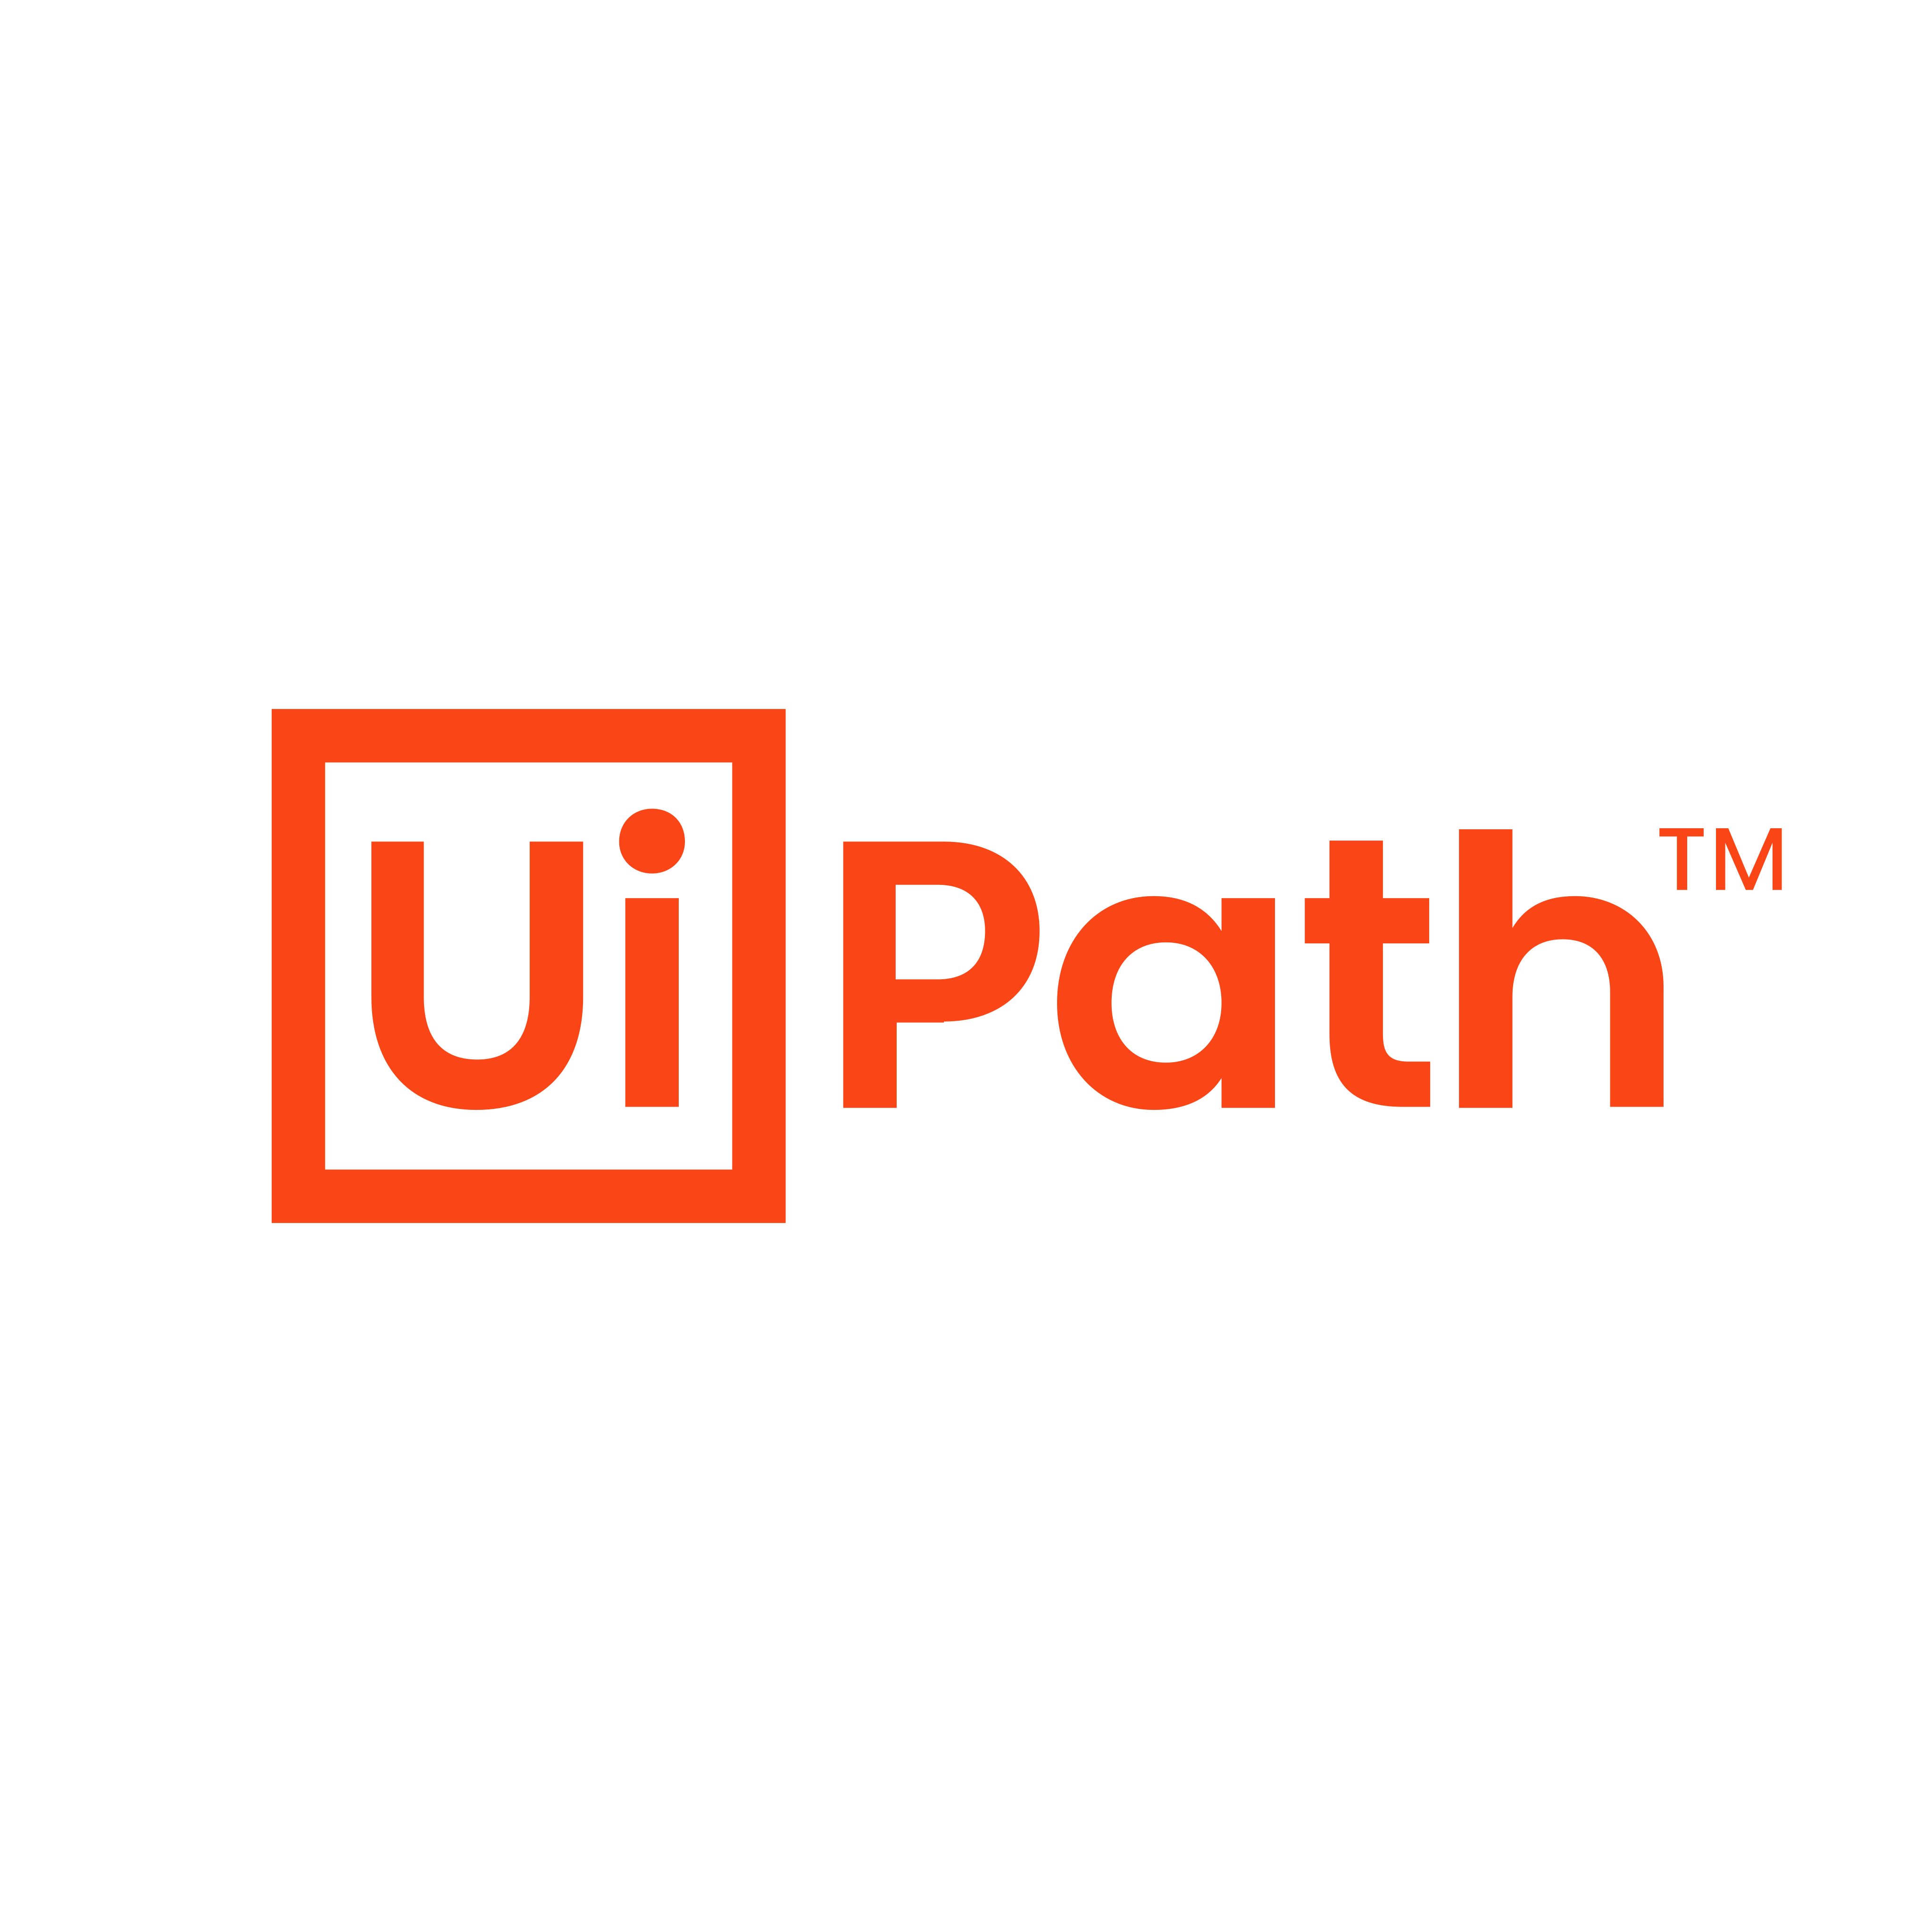 uipath logo 0 - UiPath Logo